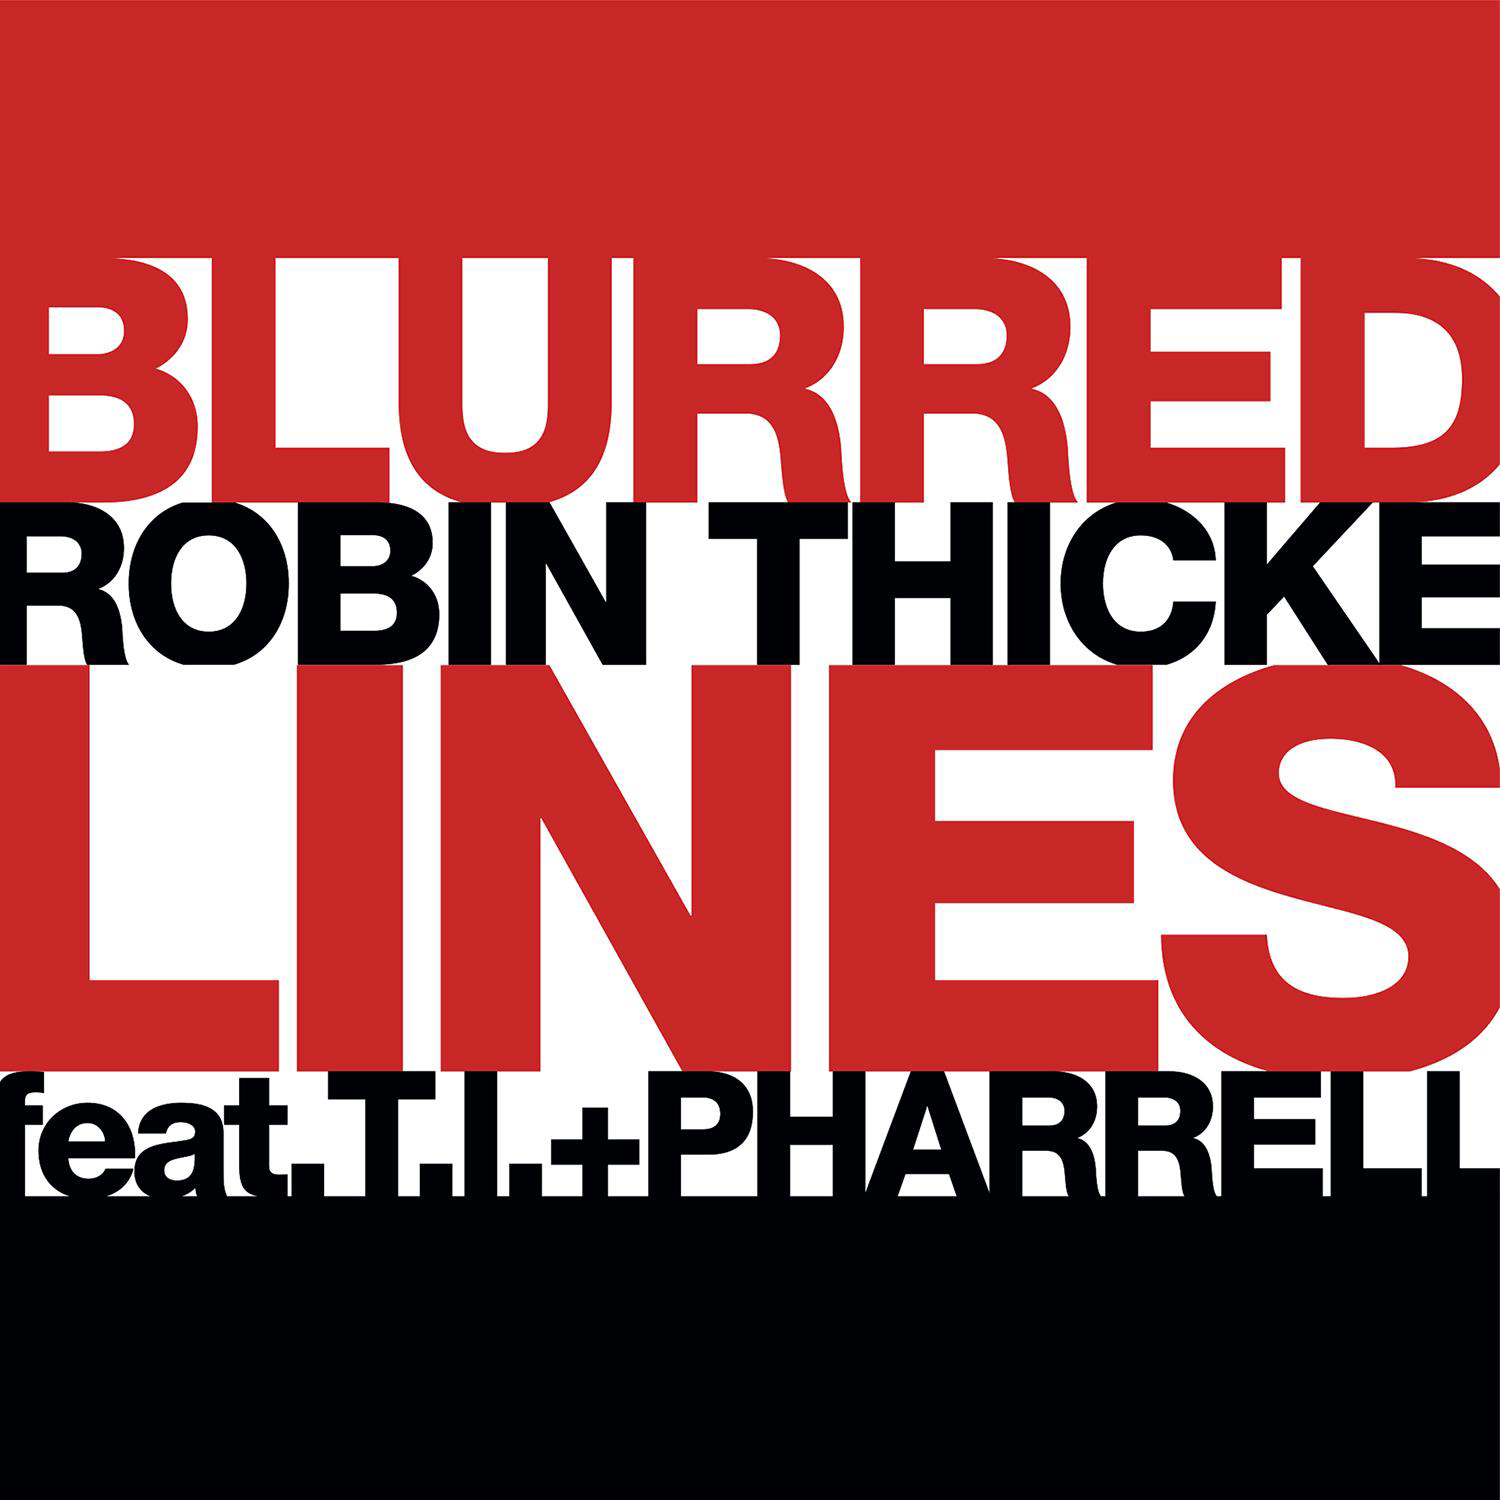 Blurred Lines - Robin Thicke feat. T.I. & Pharrell Williams // AnetaSablikFan